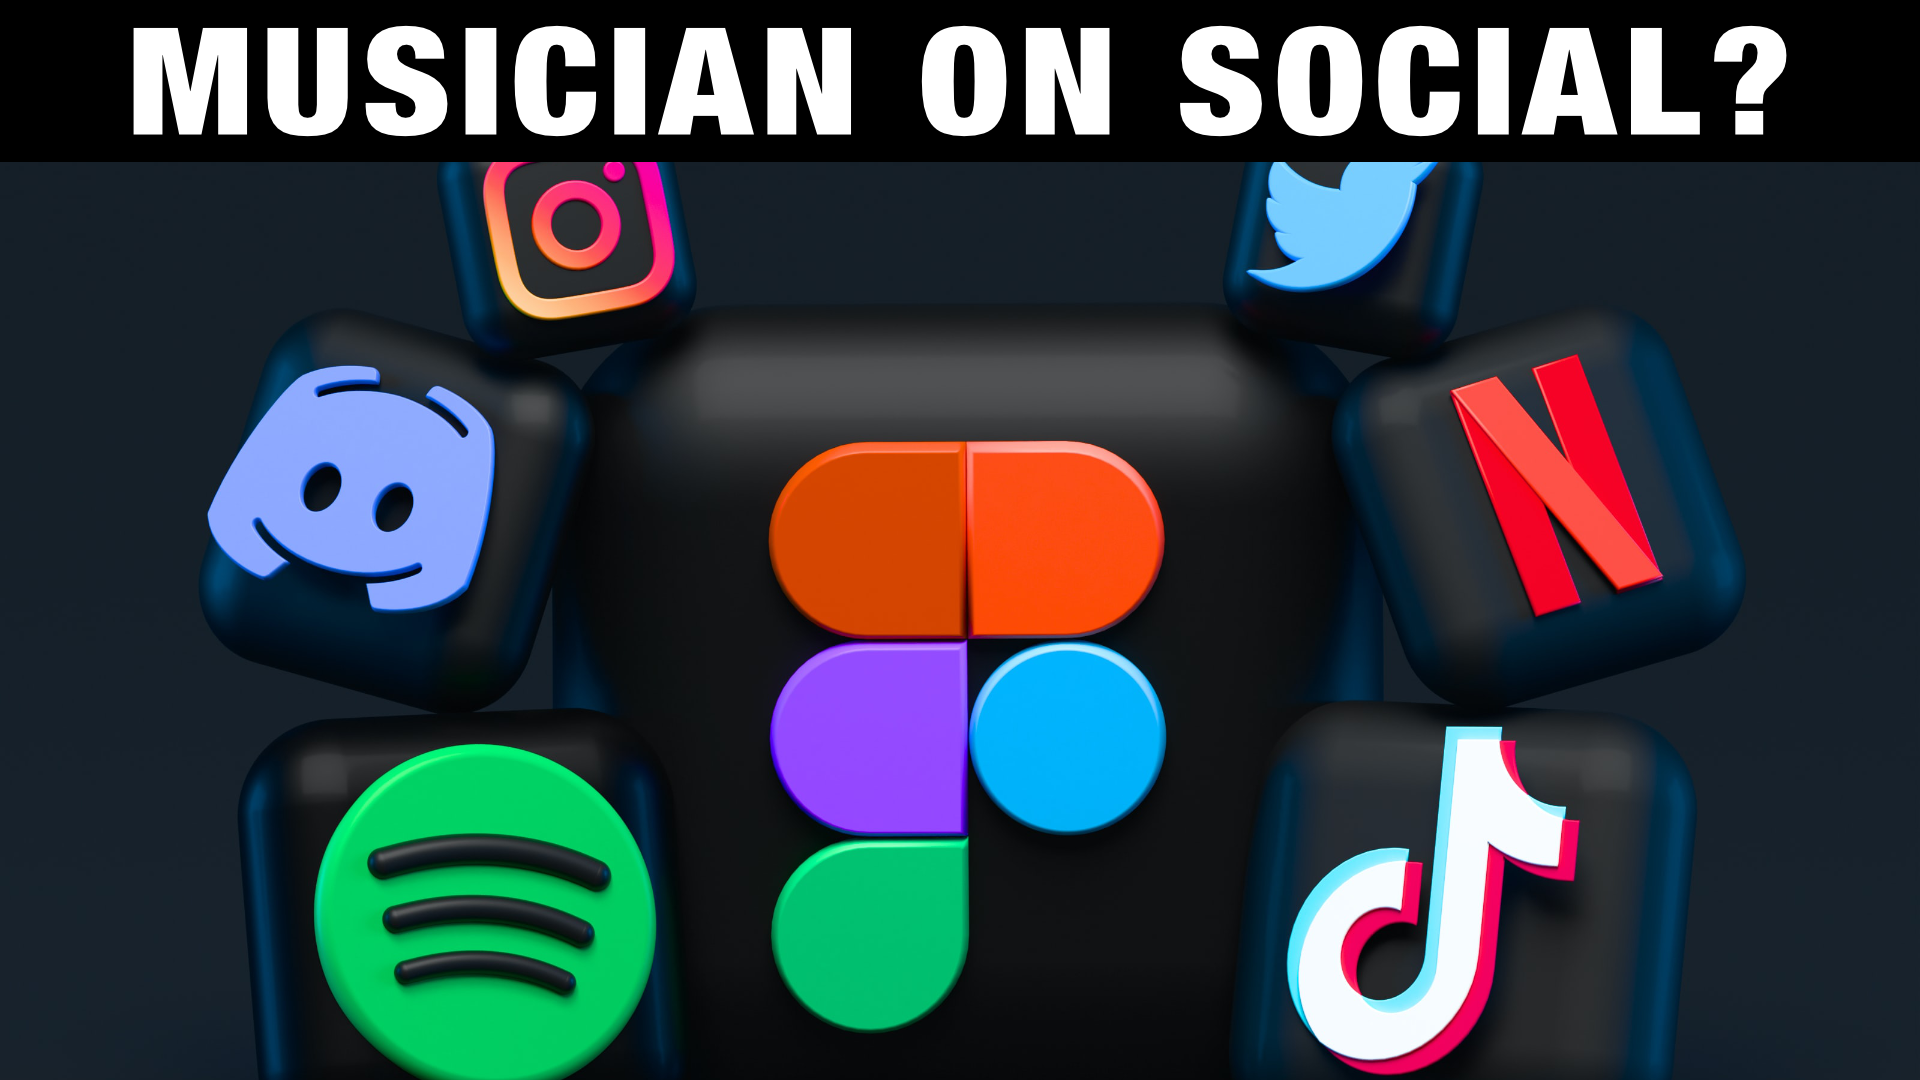 How to grow on Social Media as a Musician